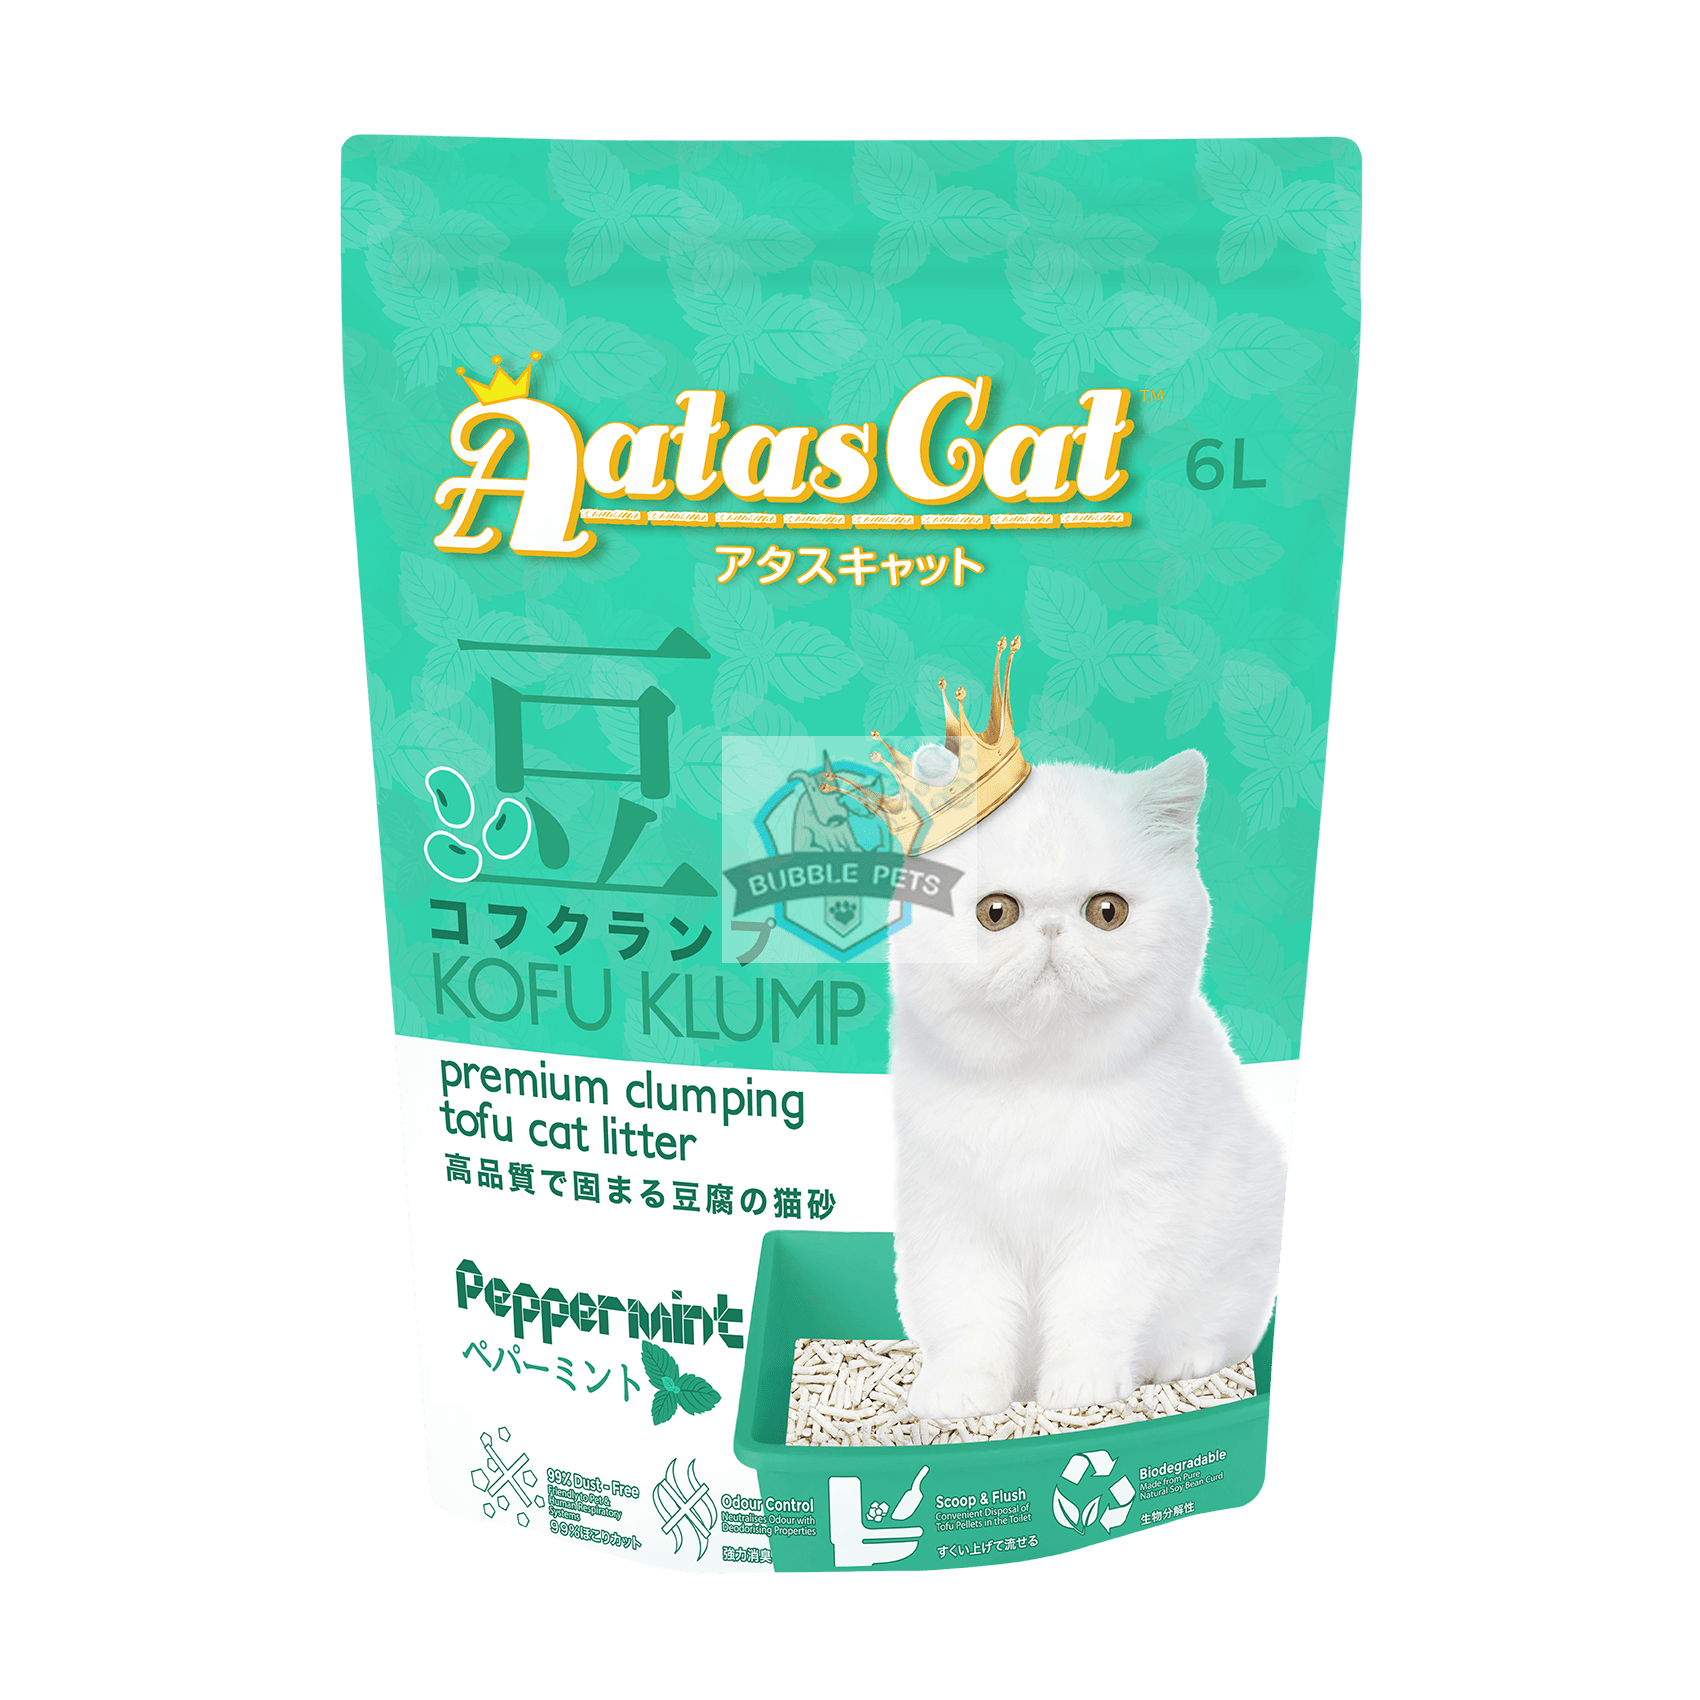 Aatas Cat Kofu Klump Tofu Cat Litter Peppermint 6L